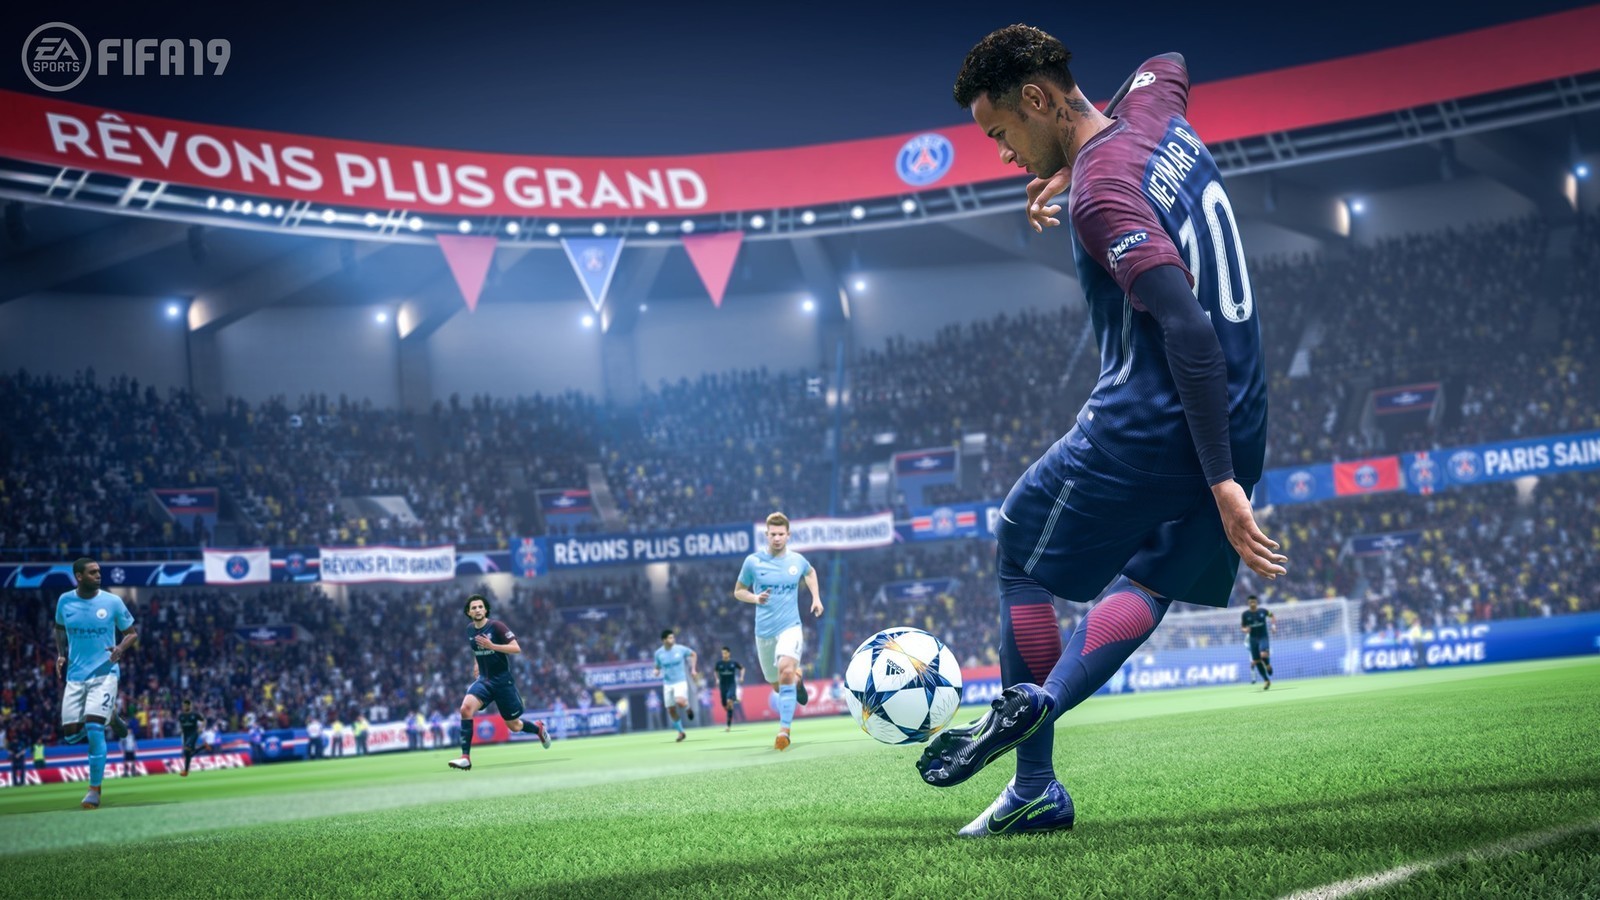 Pro Evolution Soccer 2019-CPY PC Direct Download [ Crack ]